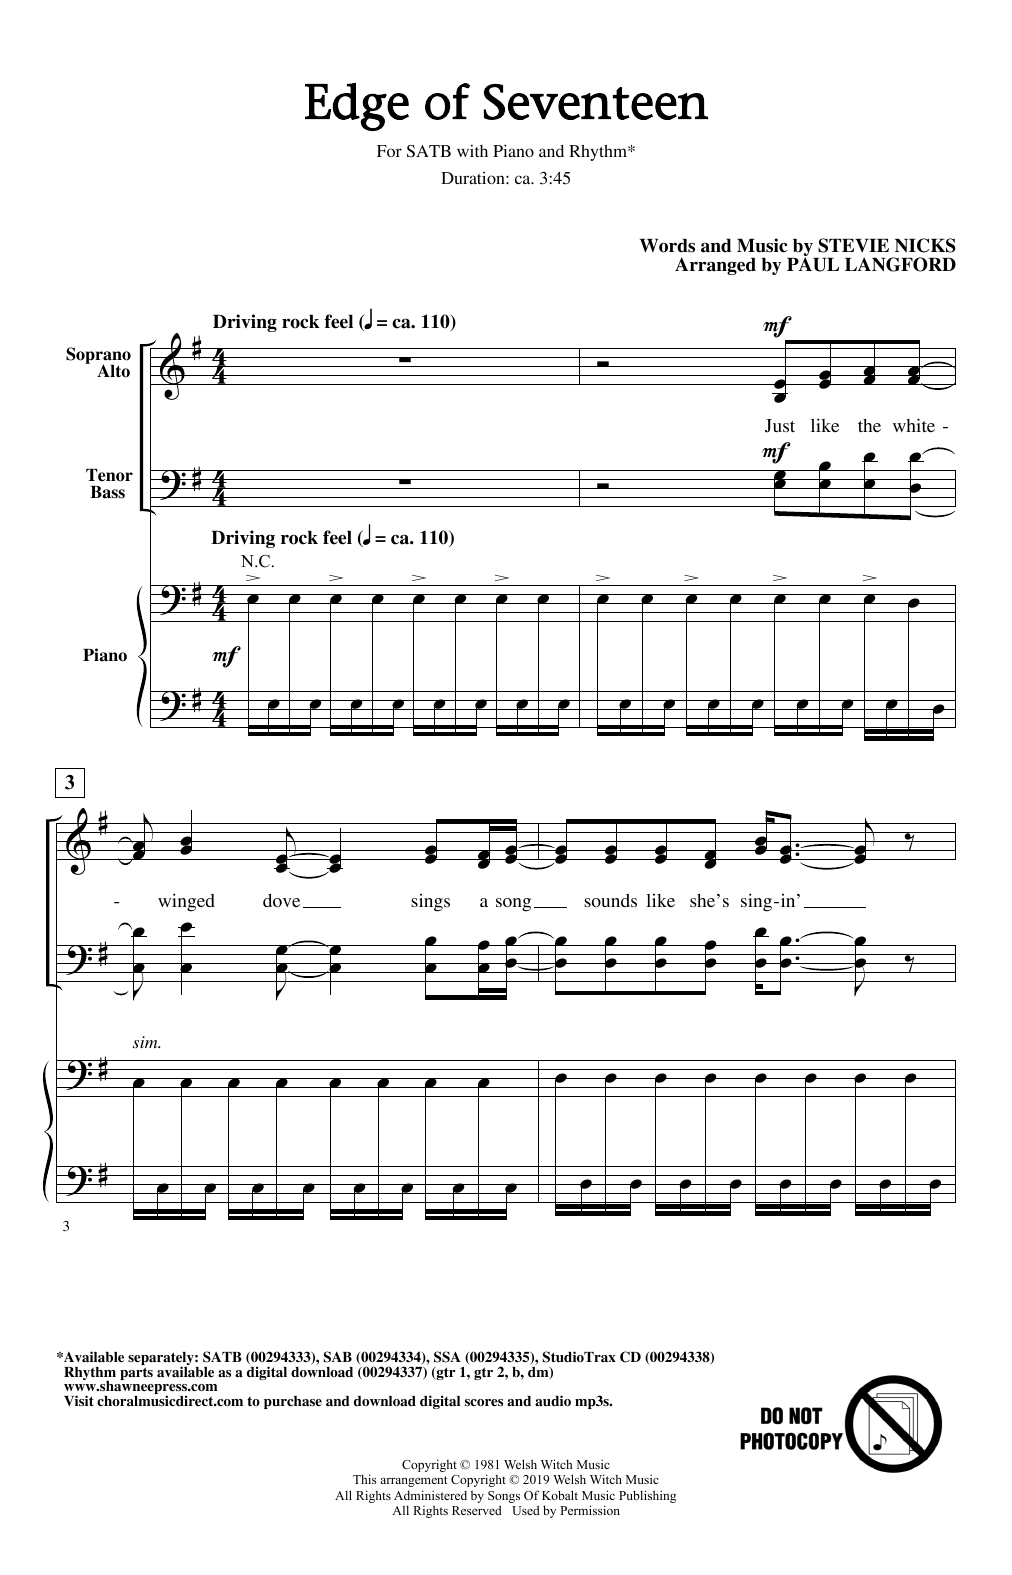 Stevie Nicks Edge Of Seventeen (arr. Paul Langford) Sheet Music Notes & Chords for SAB Choir - Download or Print PDF